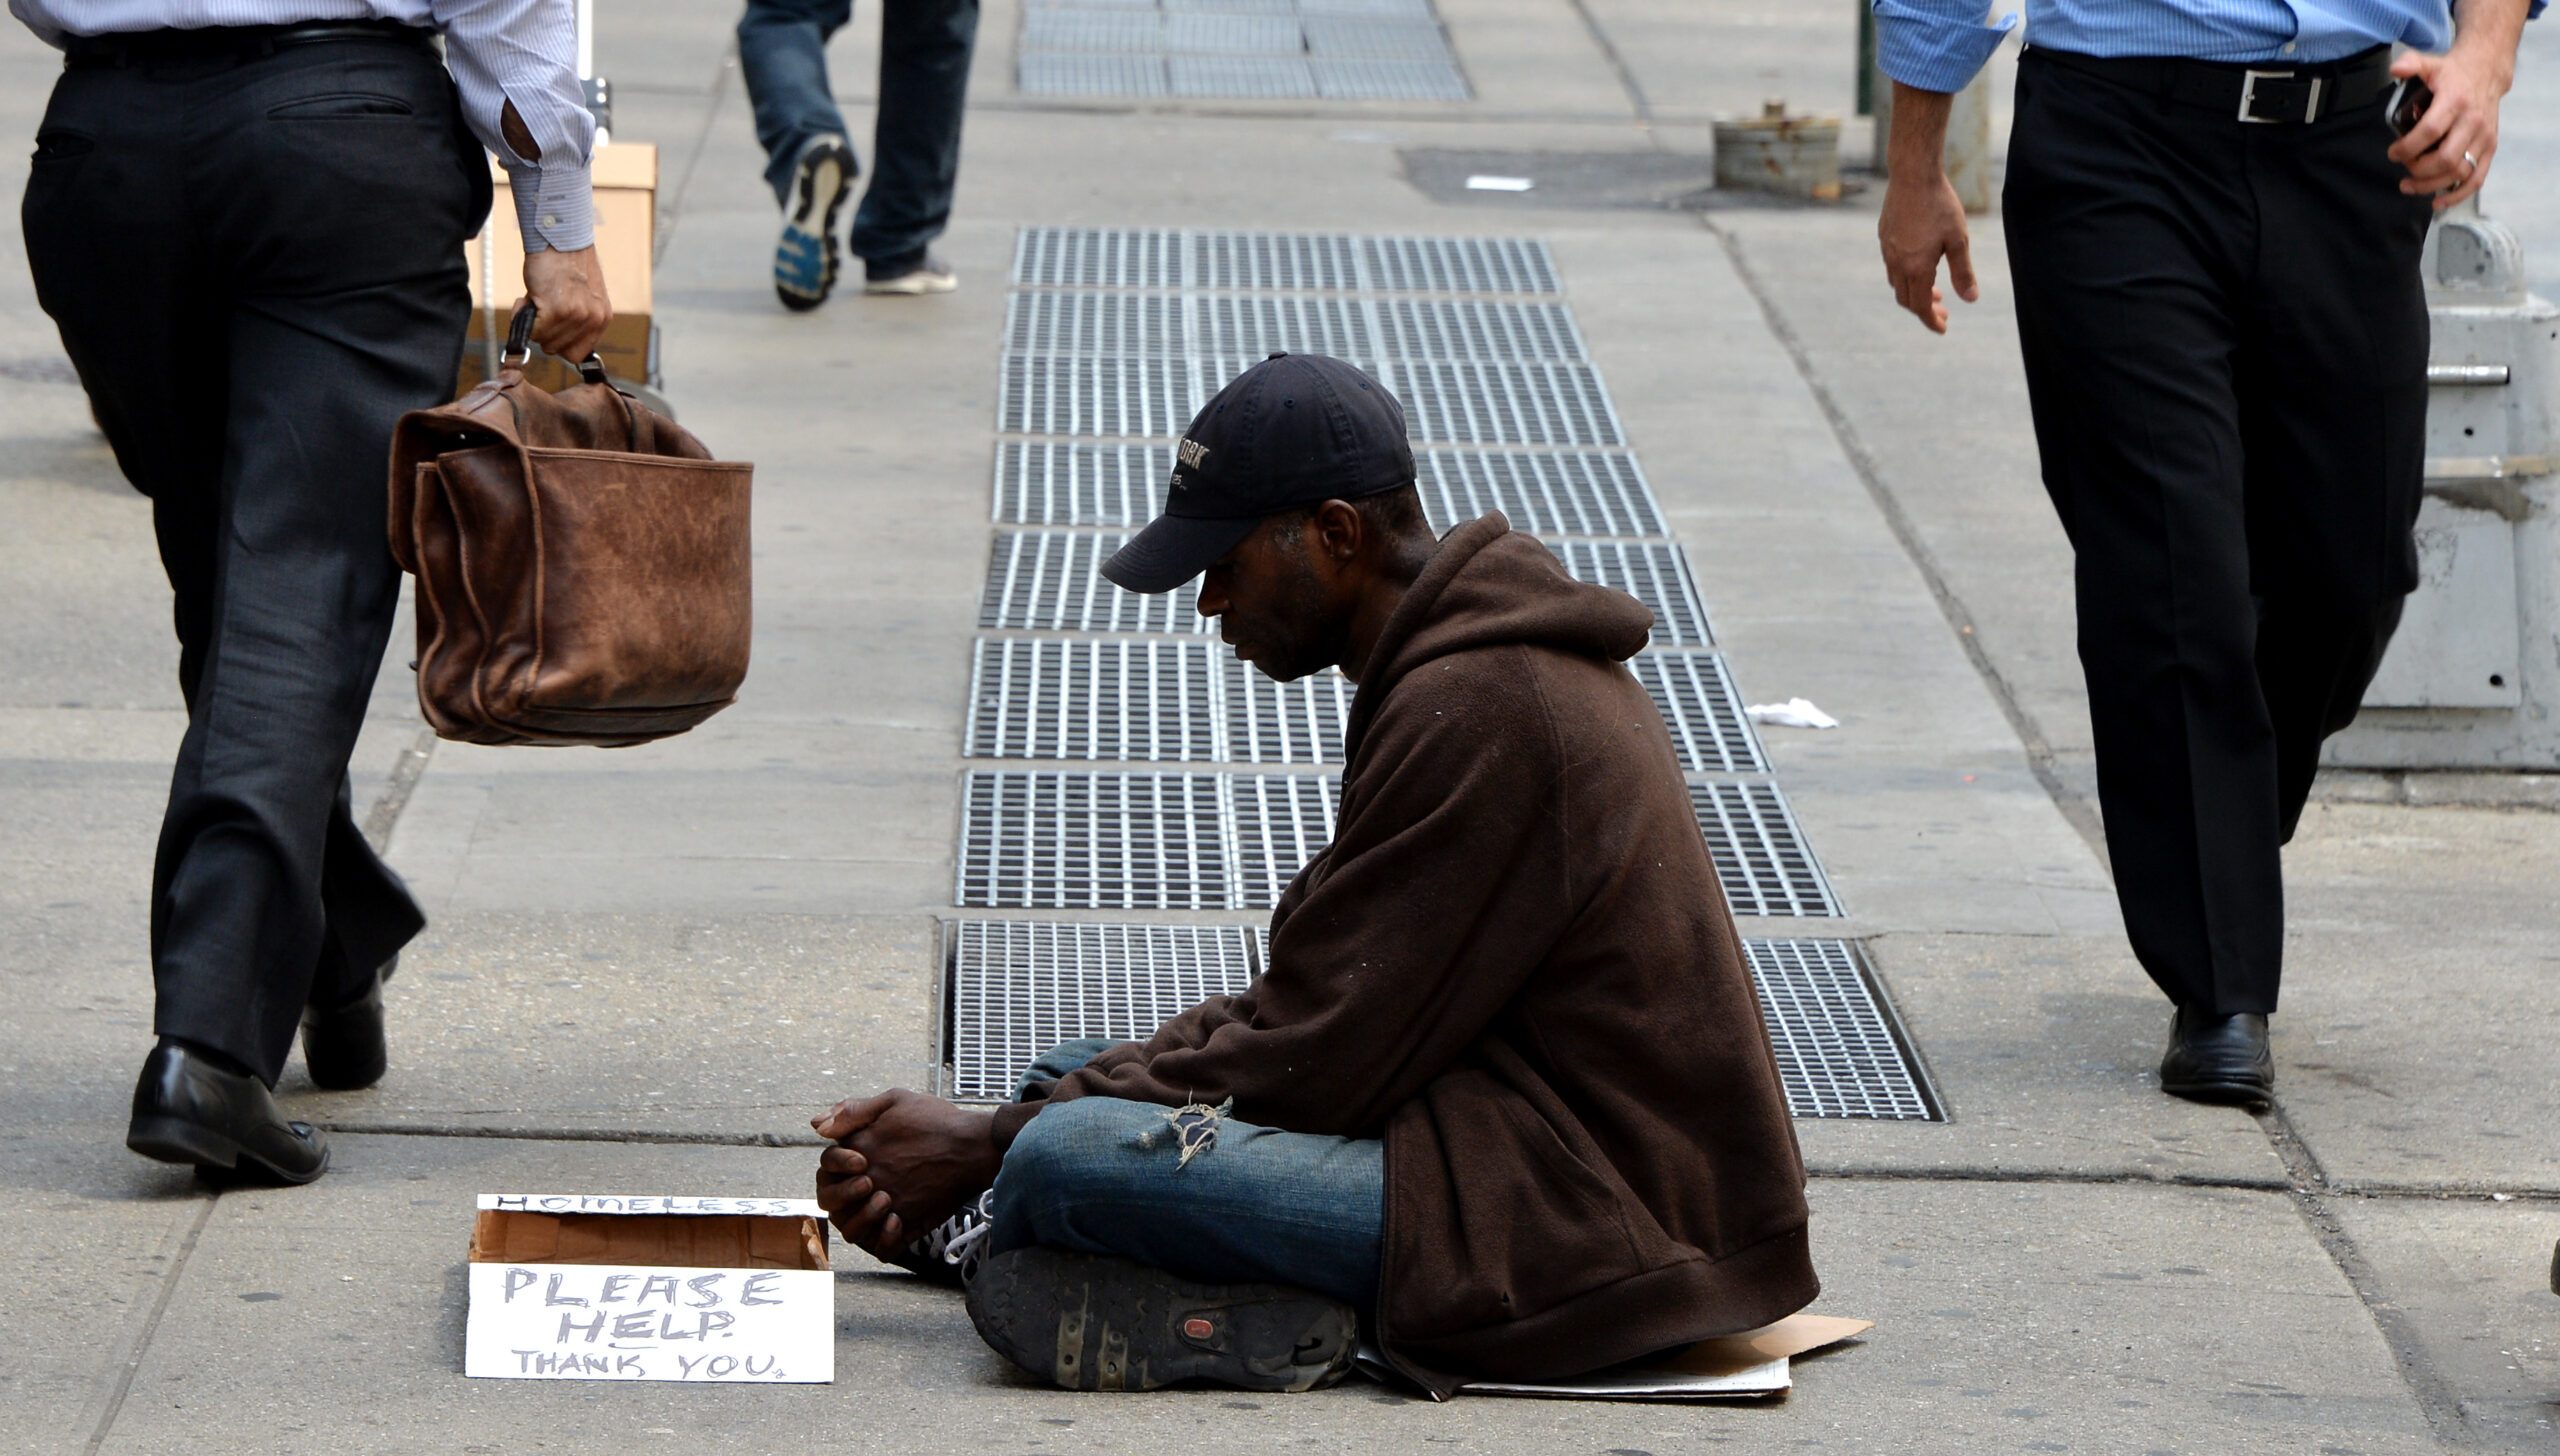 IMF warns the US over high poverty, inequality